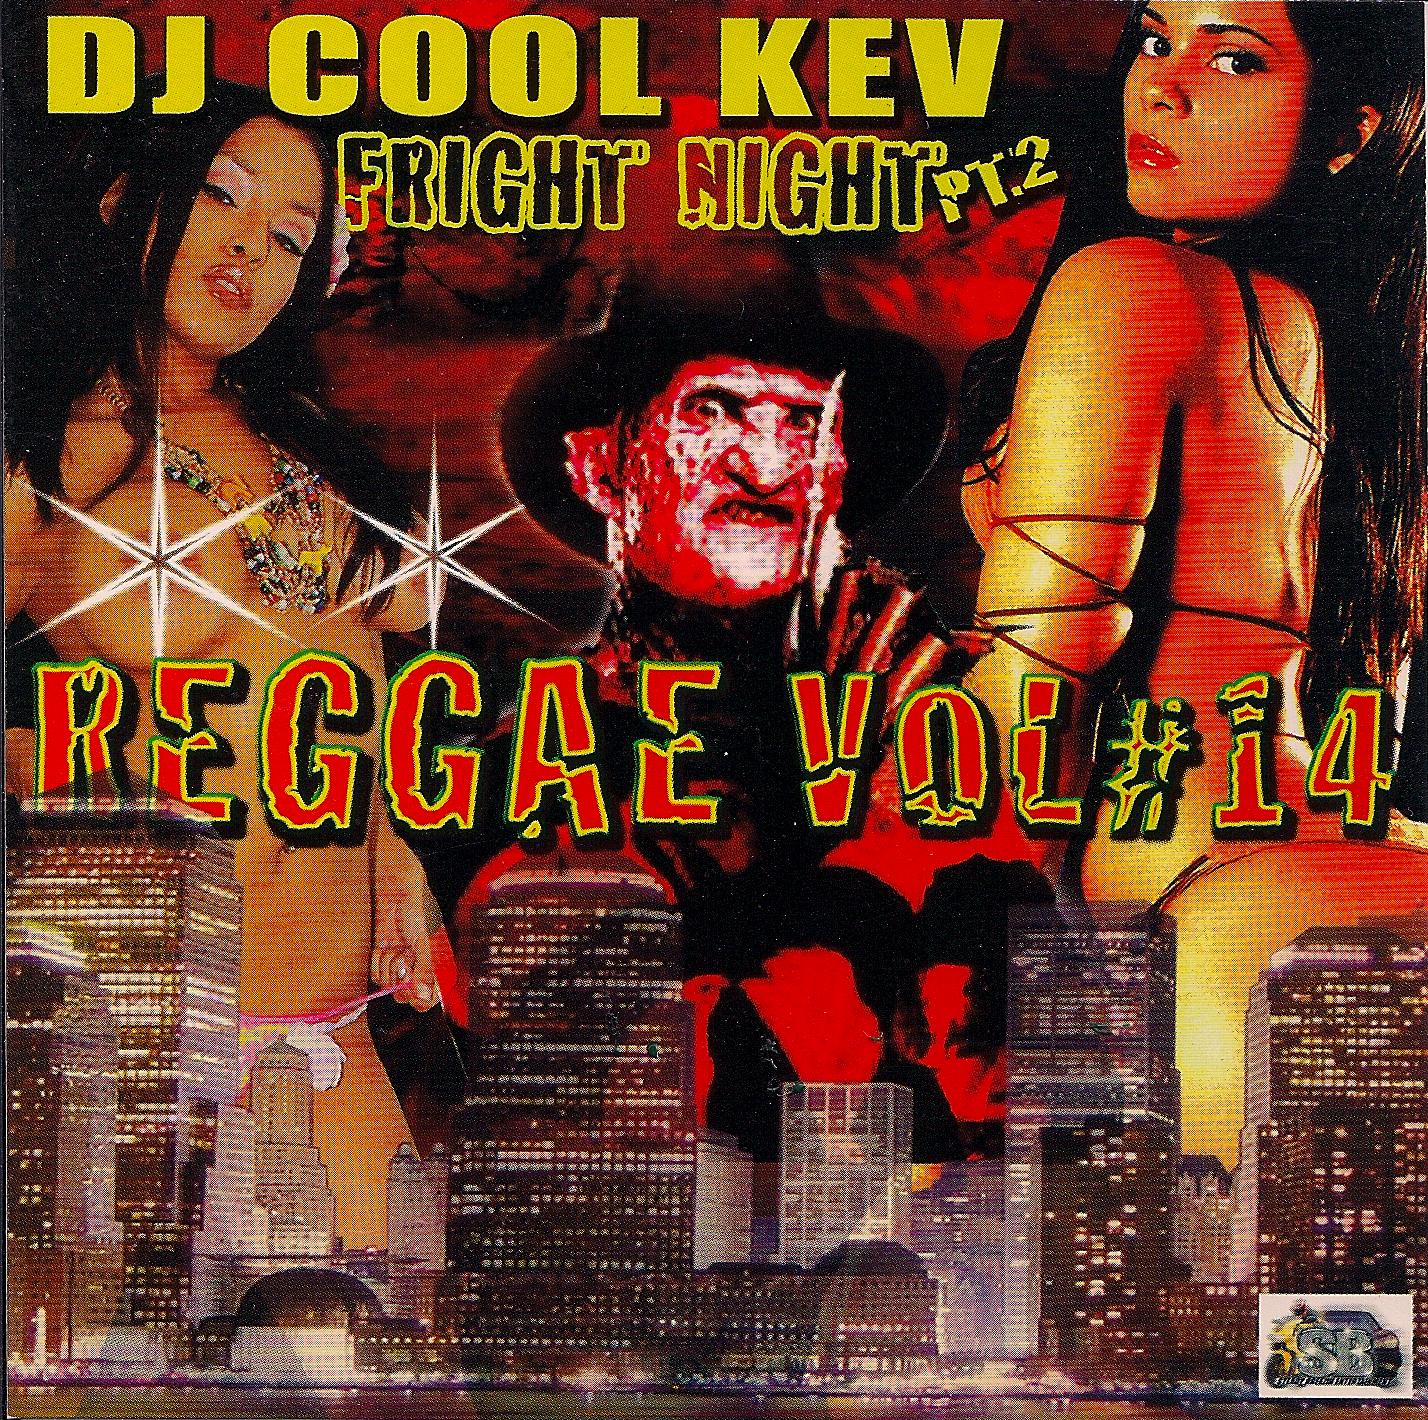 DJ Cool Kev – REGGAE 14, Reggae, Dancehall Reggae, Throwback Reggae, Mixtape Downloads, Downloads